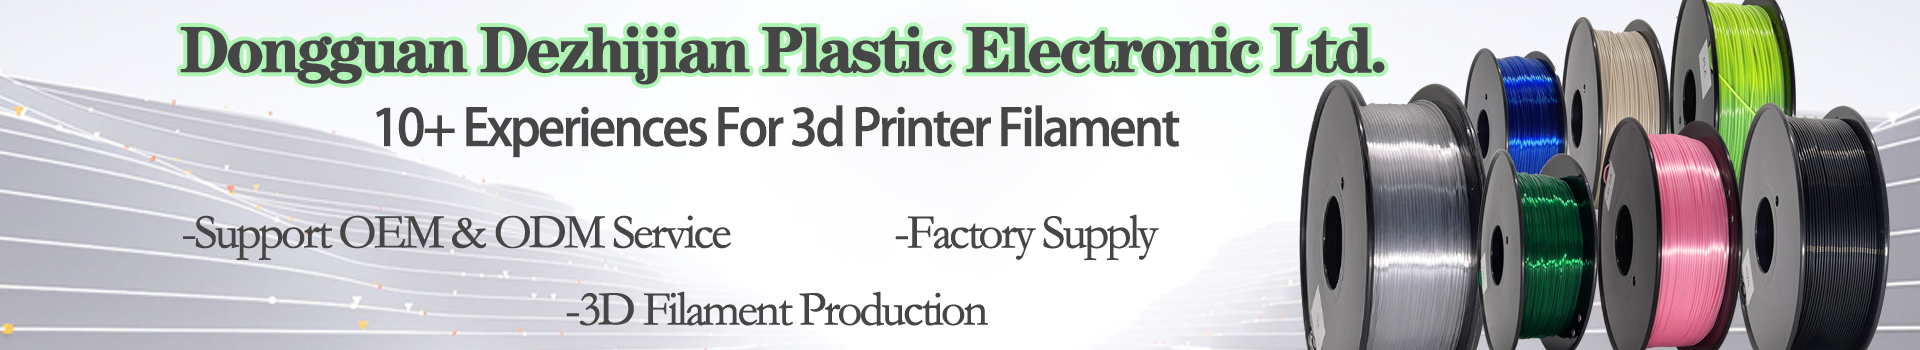 Pinrui 3d εκτυπωτής 1.75MMetg νήμα πράσινο χρώμα για τον εκτυπωτή 3D